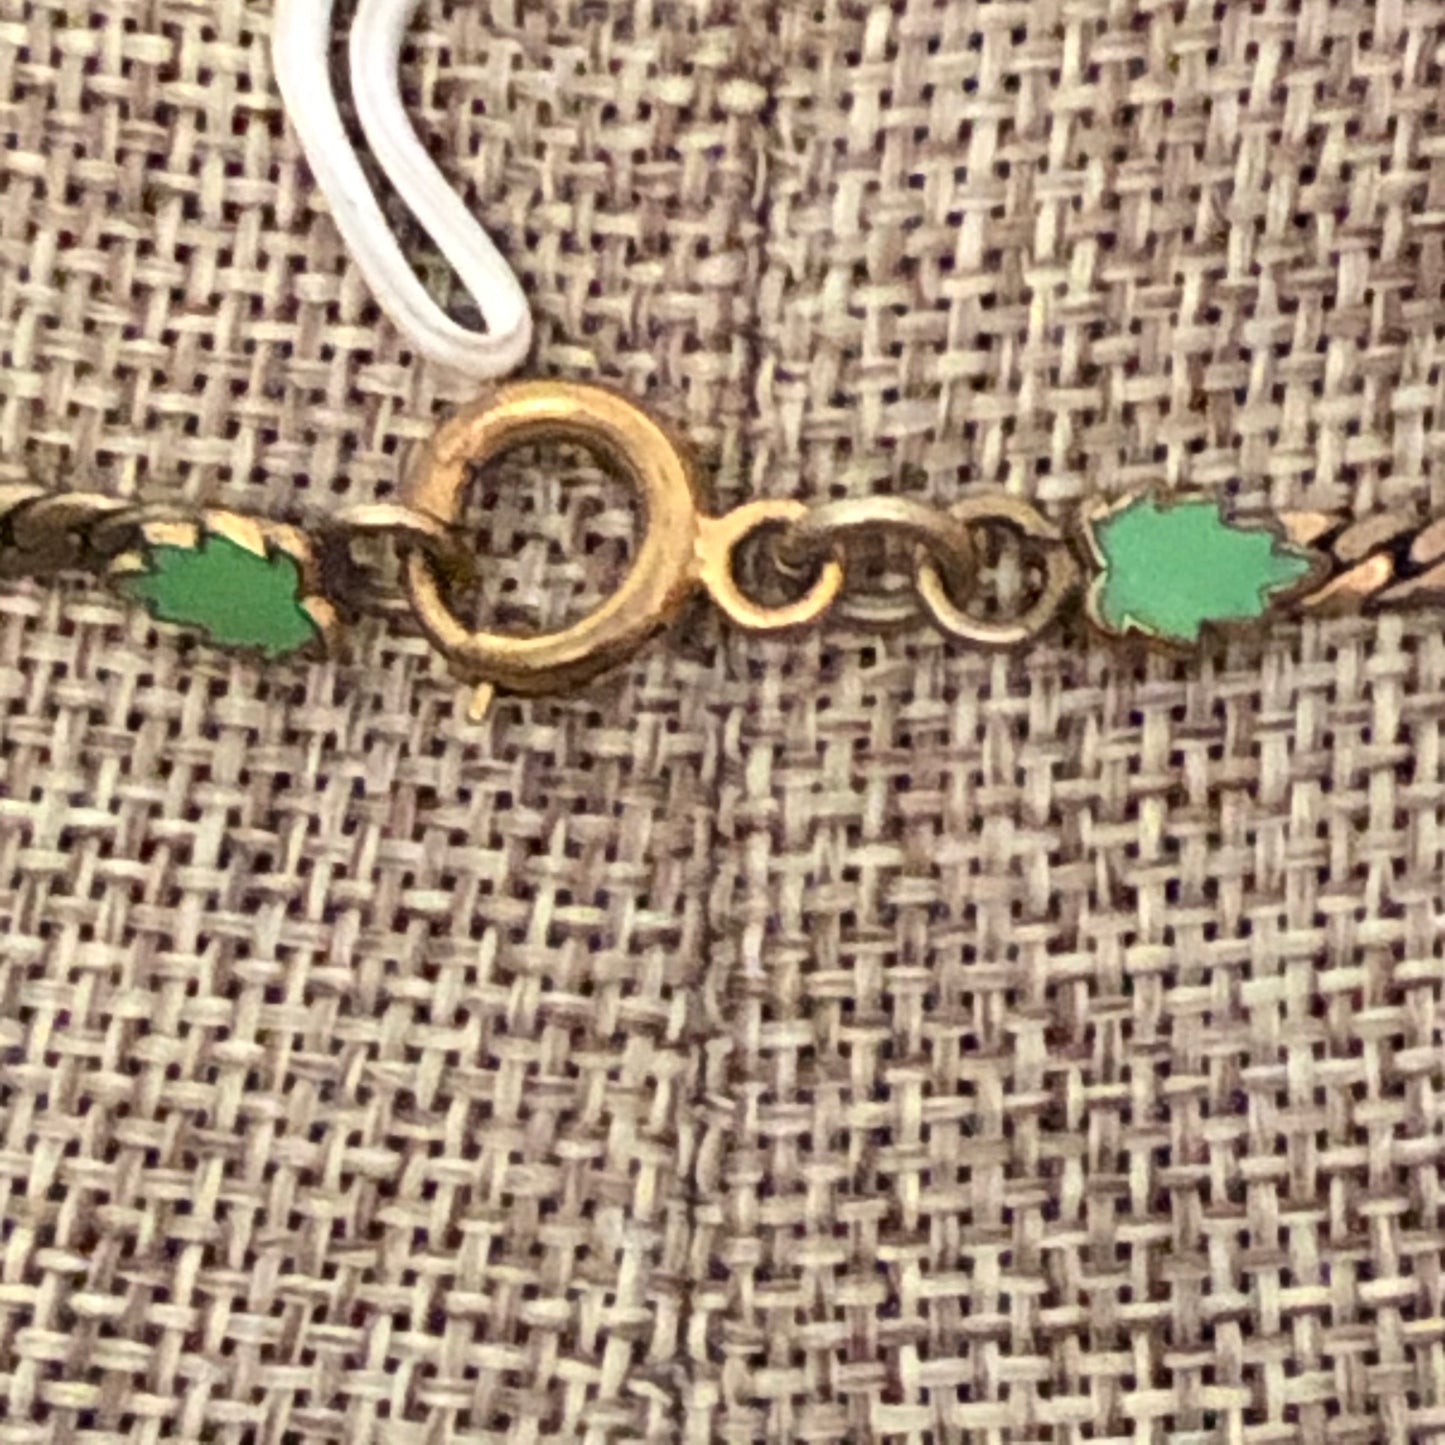 Vintage Inspired Enamel and Rhinestone Necklace